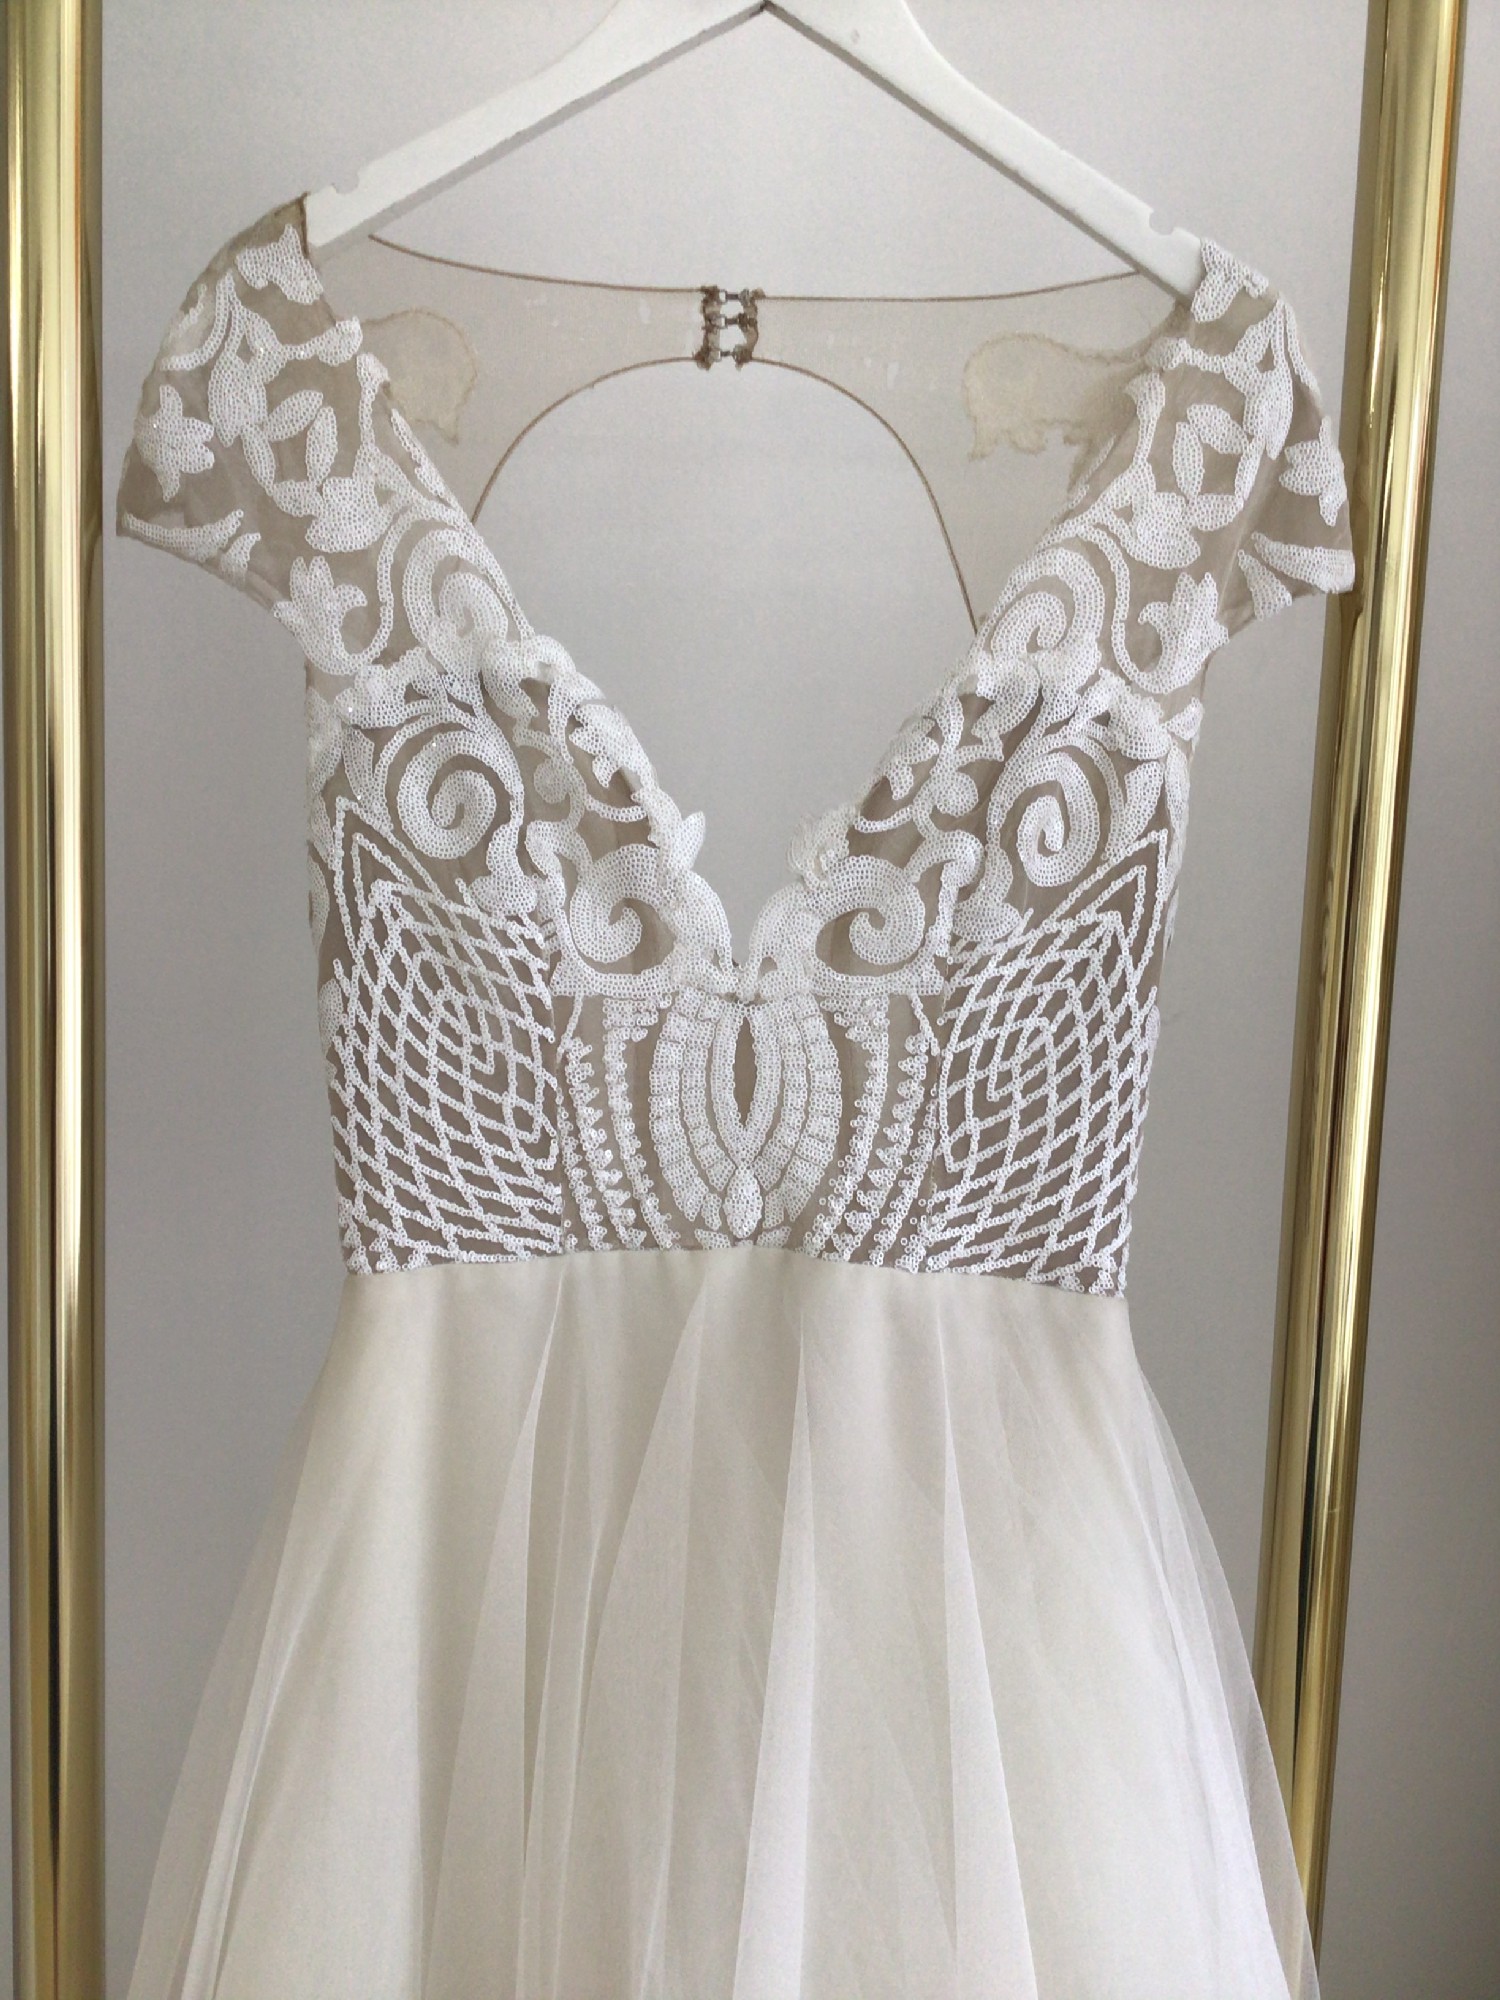 Blush by Hayley Paige Dakota Sample Wedding Dress Save 52% - Stillwhite